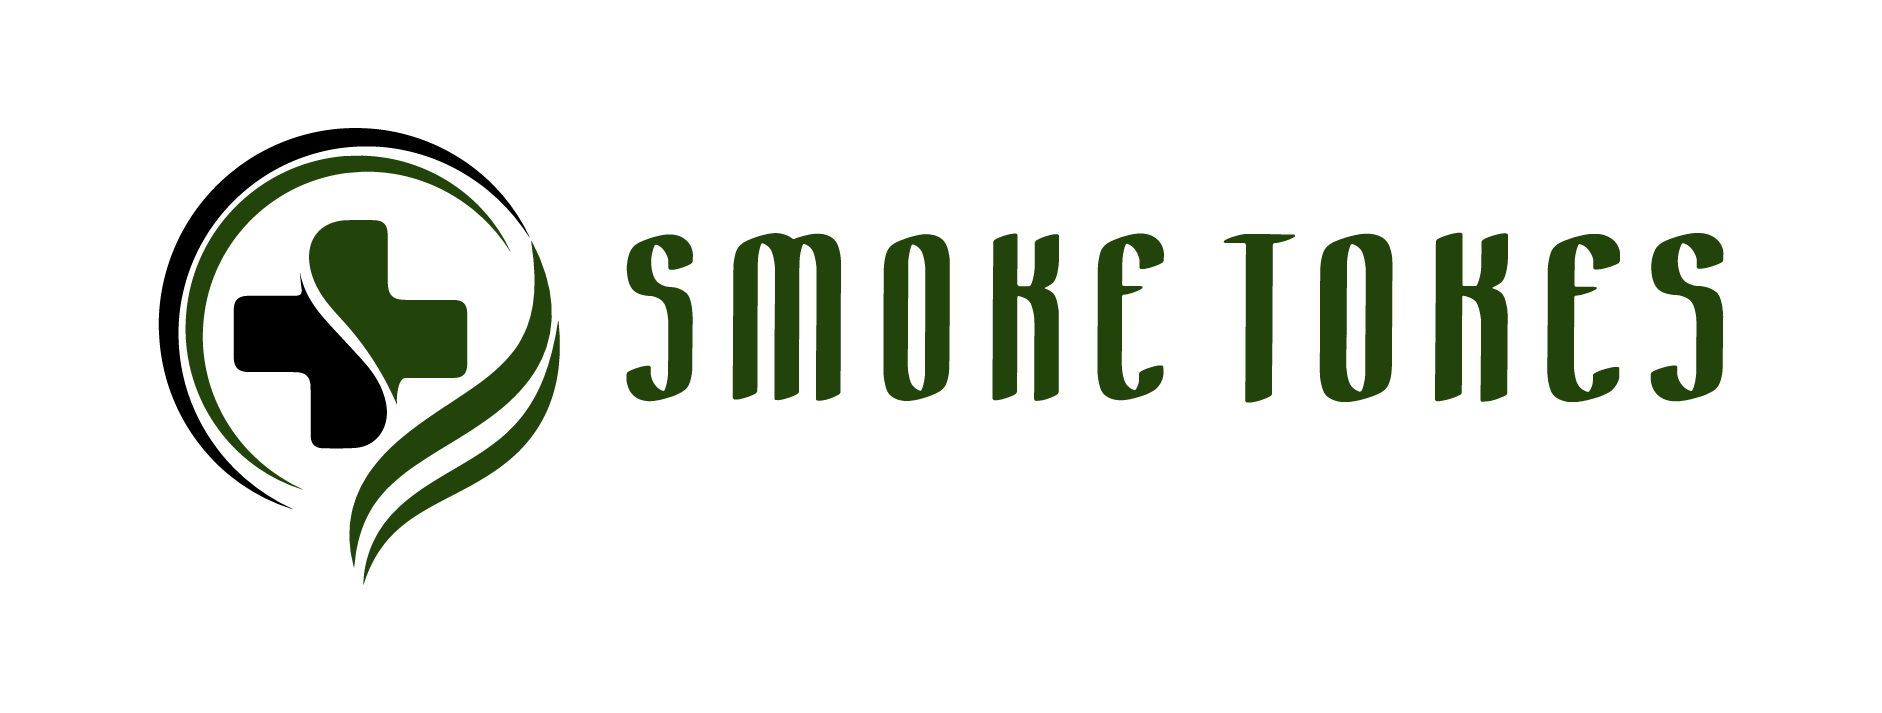 Smoke Tokes logo